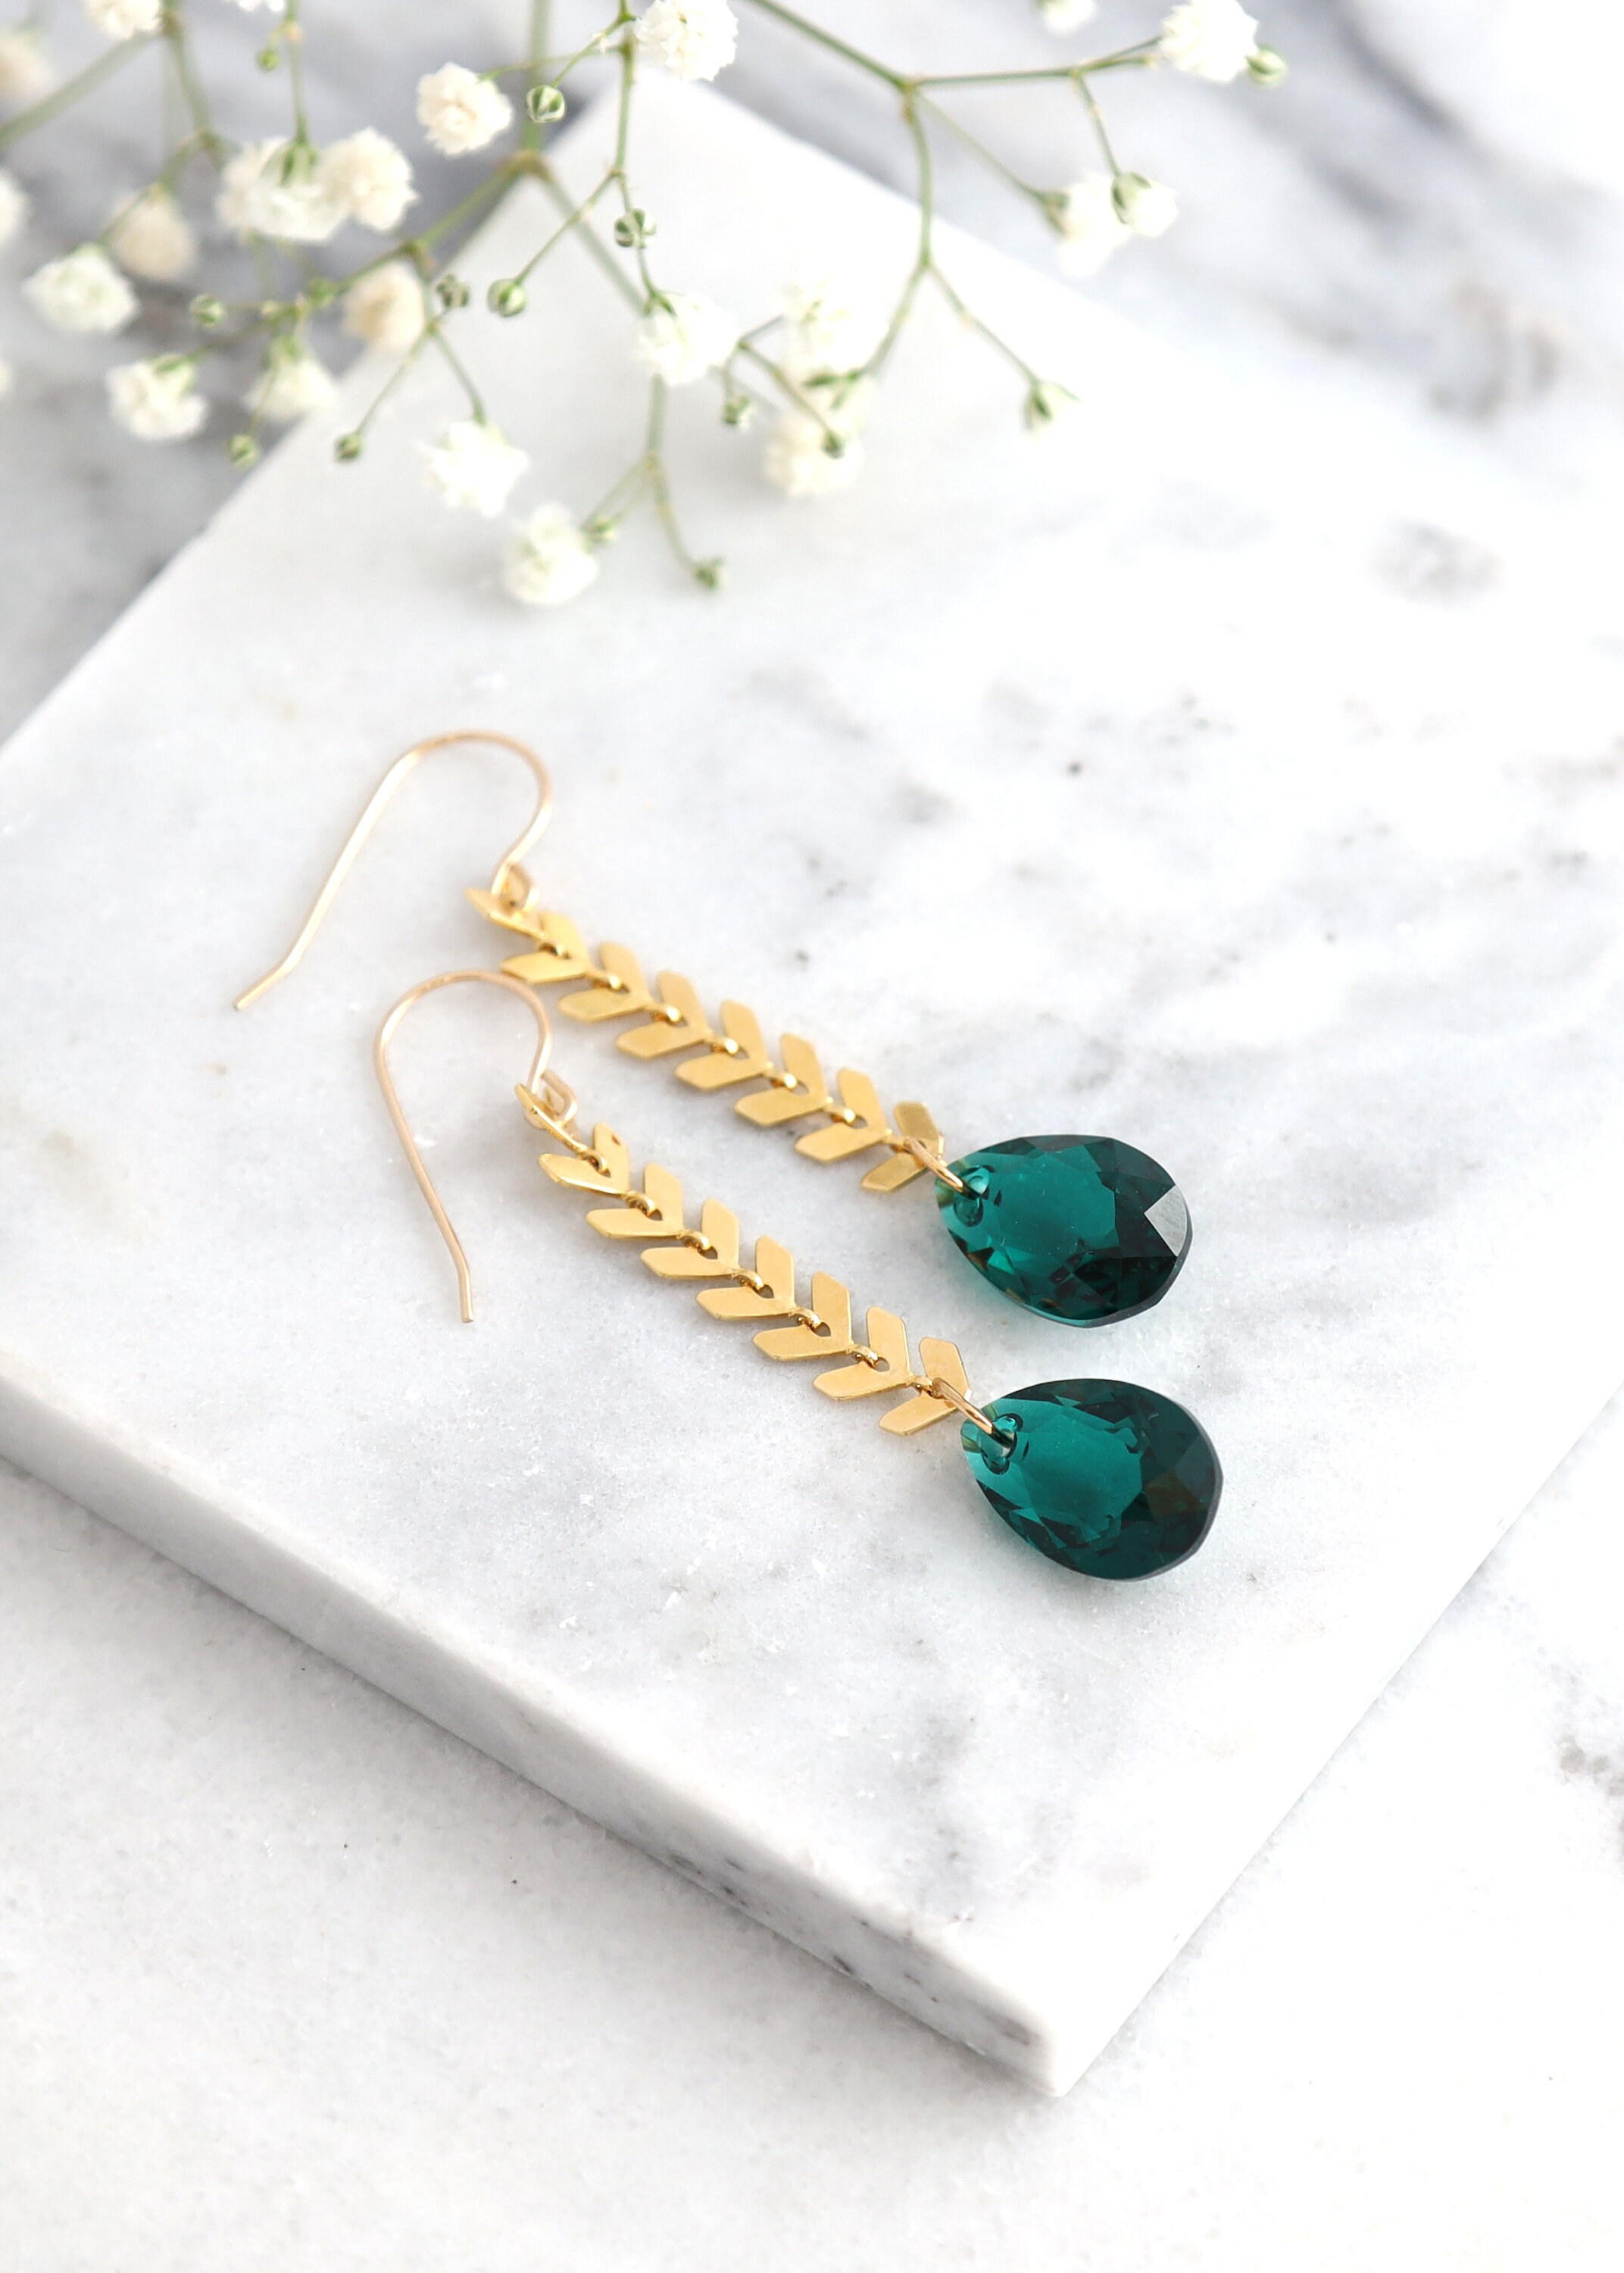 1 Box DIY 6 Pairs Teardrop Drop Gemstone Earring Making Starter Kit  Exclusive Jewelry Arts Craft Kit Turquoise Pendants - AliExpress